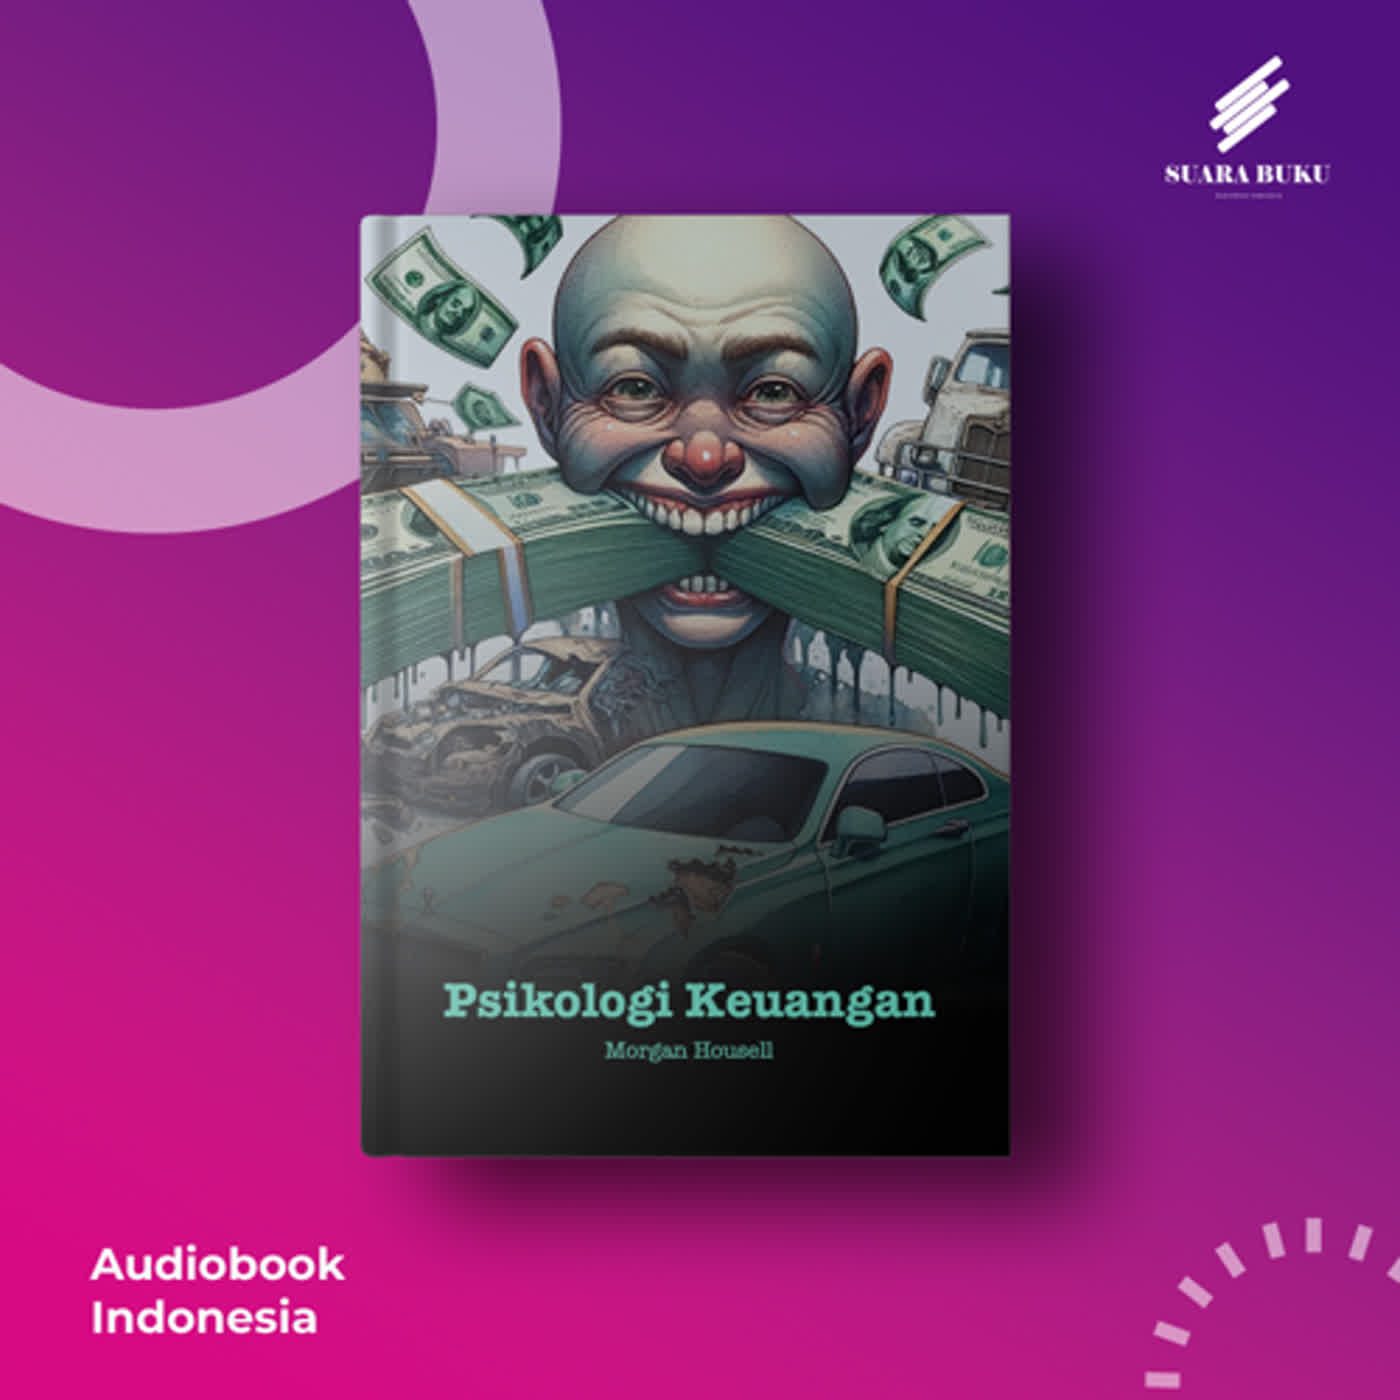 #3 Psikologi Keuangan Karya Morgan Housell - Audiobook Indonesia Suara Buku